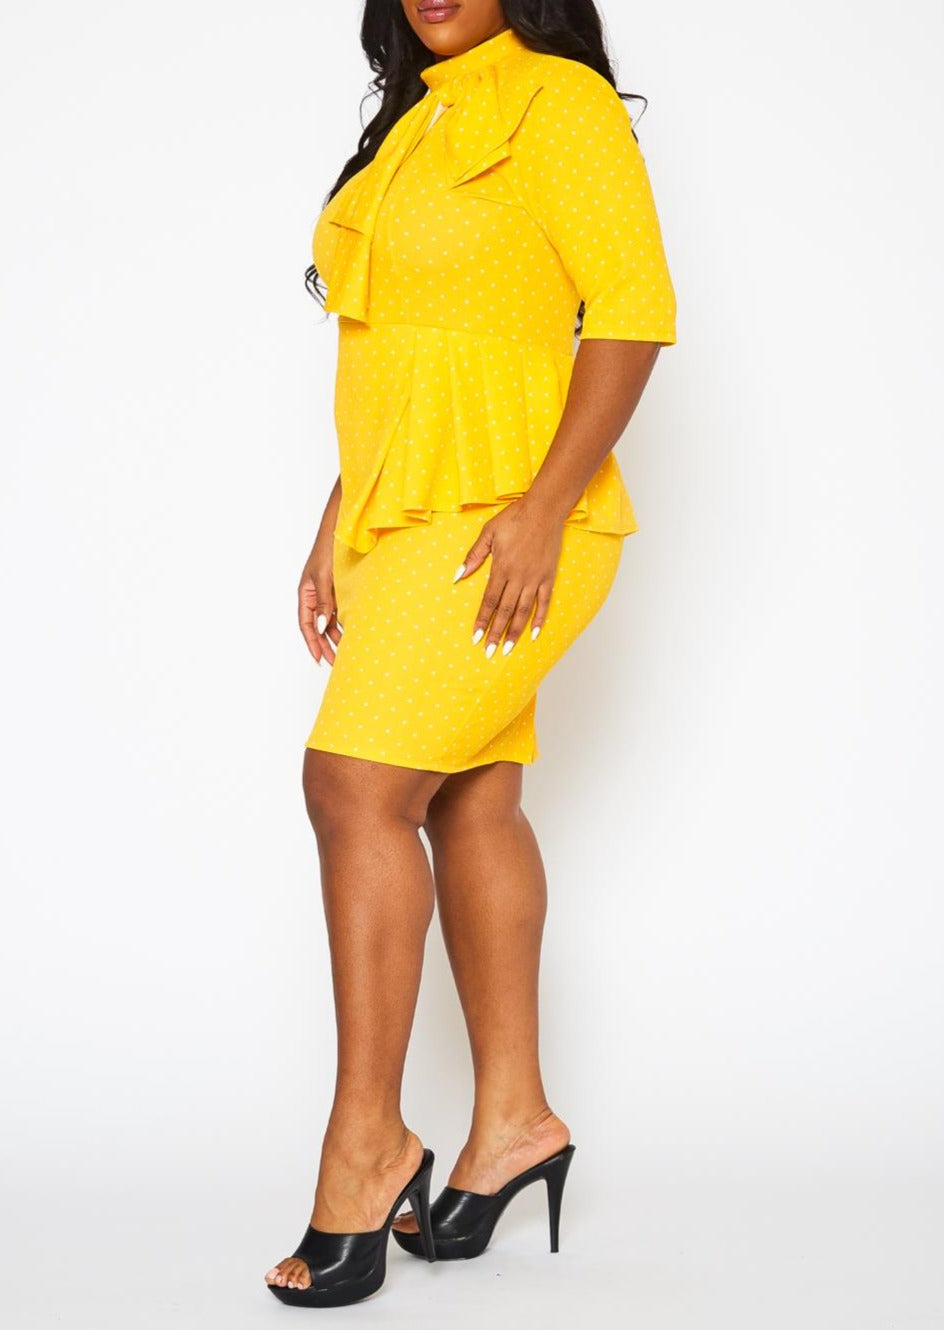 HI Curvy Plus Size Women  Print Peplum Mini Dress Made in USA